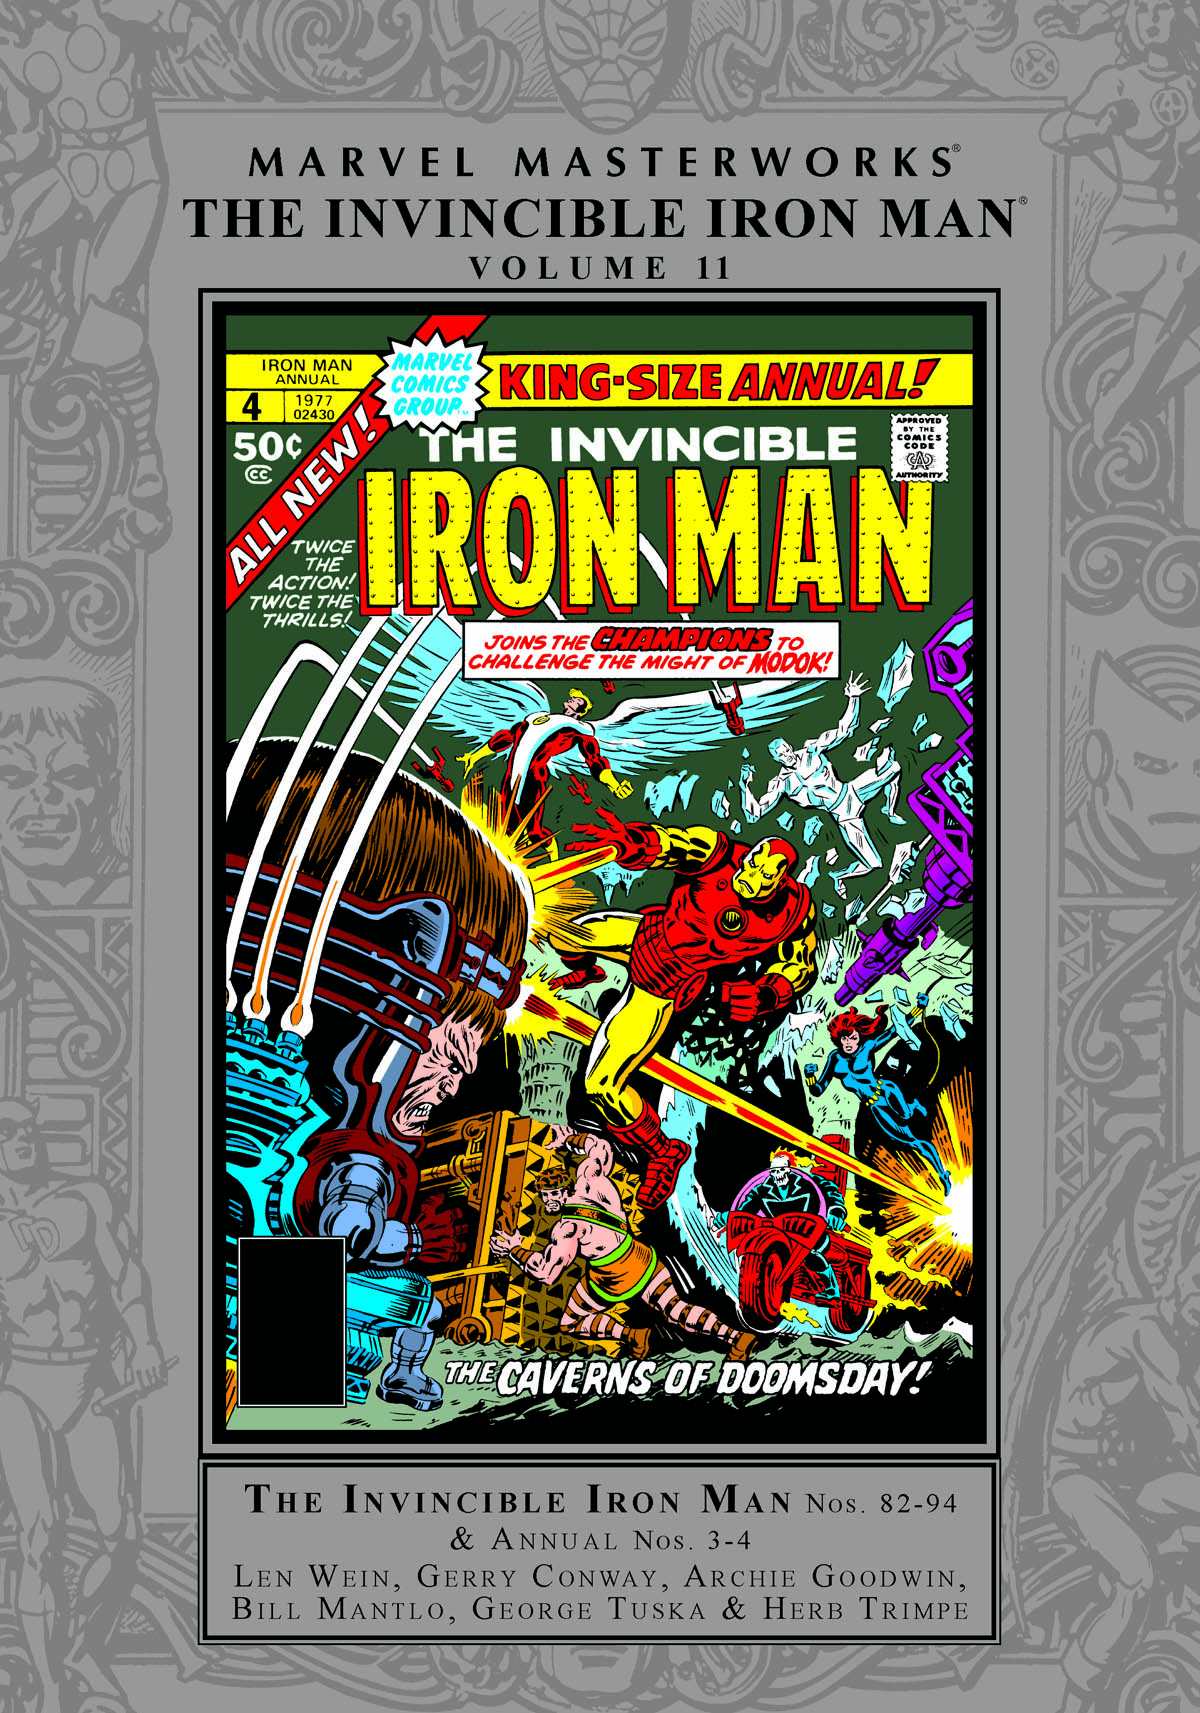 Marvel Masterworks: The Invincible Iron Man Vol. 11 (Trade Paperback)